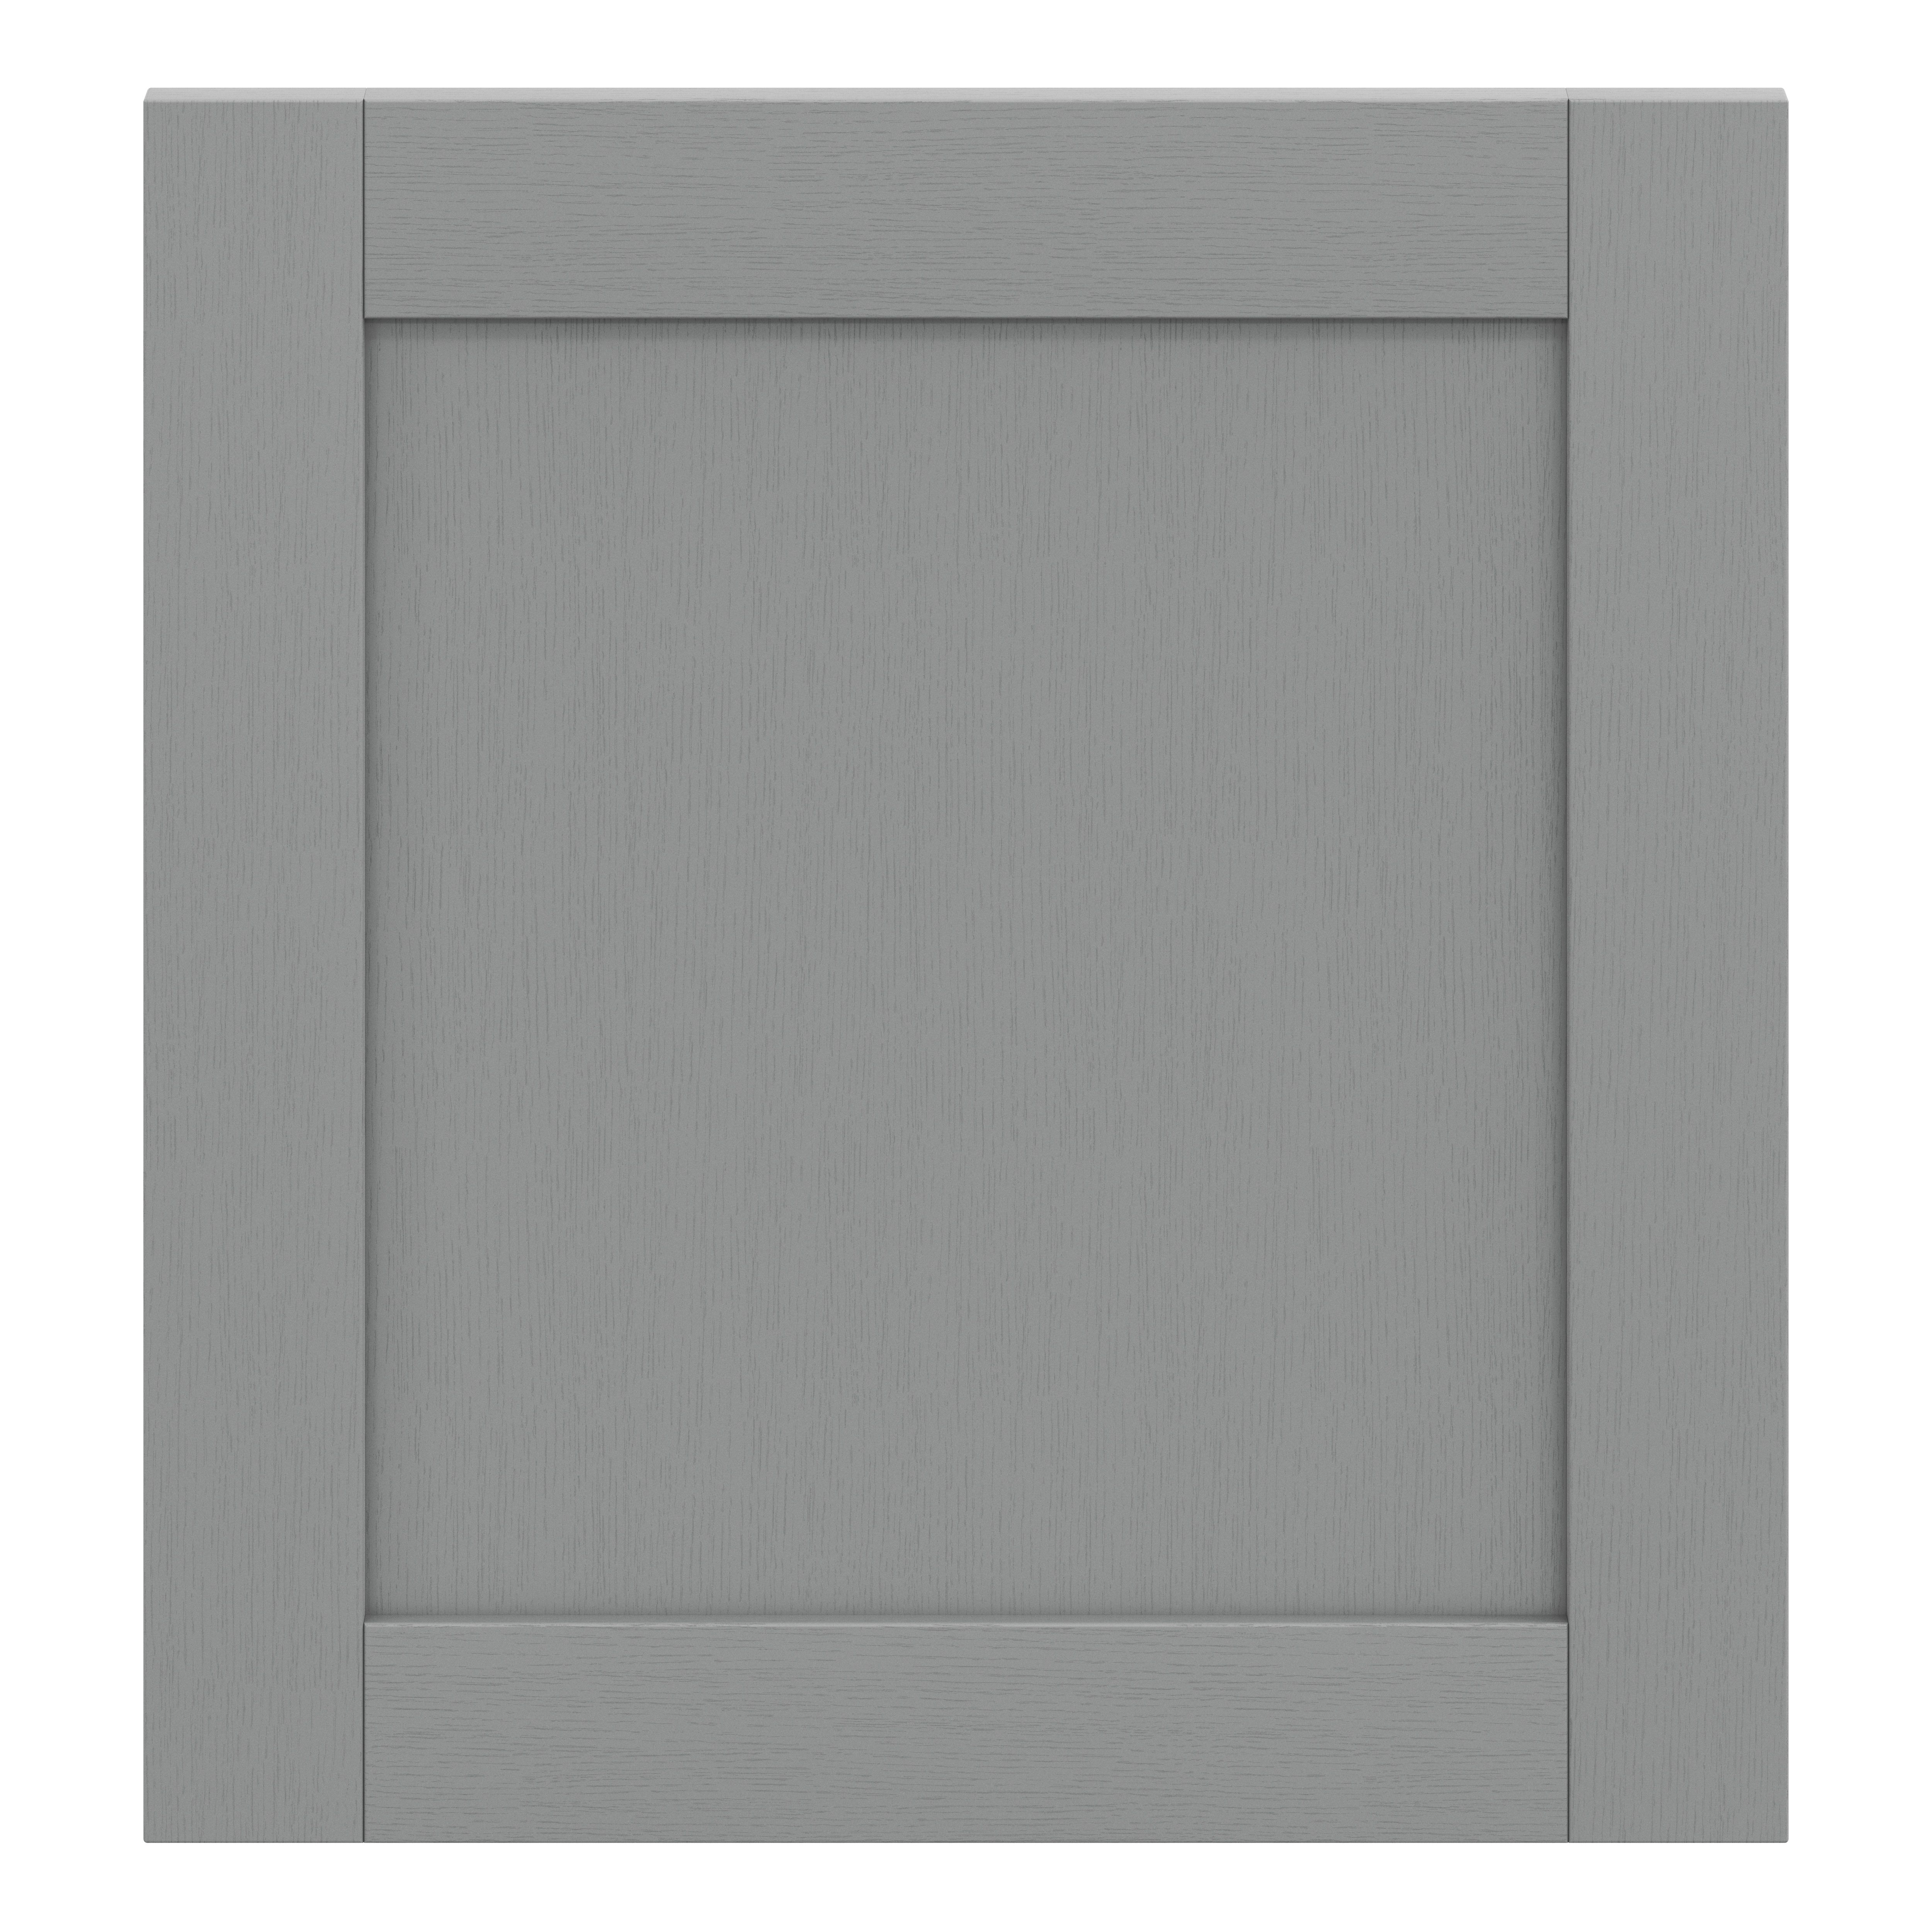 GoodHome Alpinia Matt Slate Grey Painted Wood Effect Shaker Tall appliance Cabinet door (W)600mm (H)633mm (T)18mm